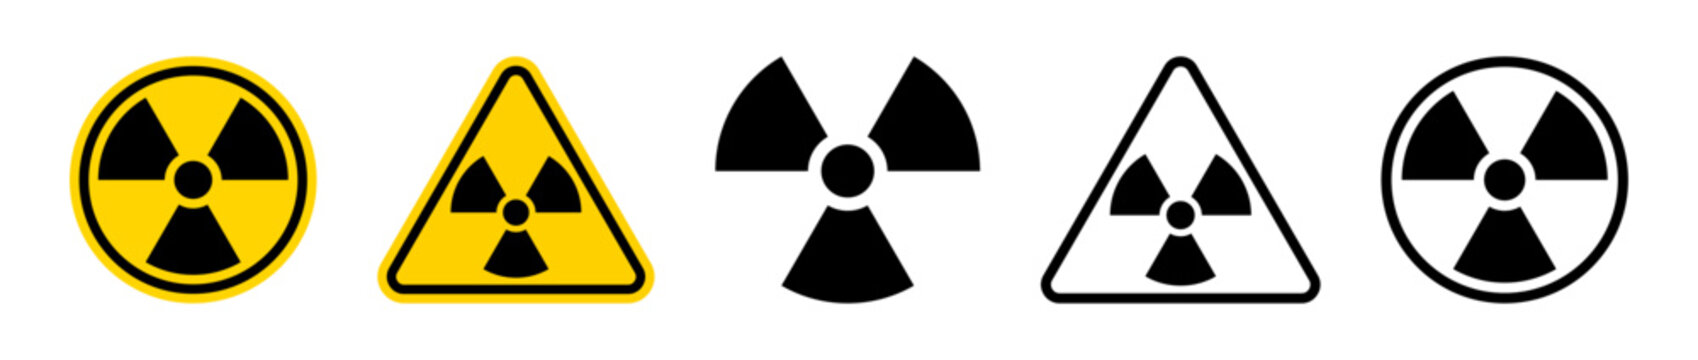 Radiation hazard sign set